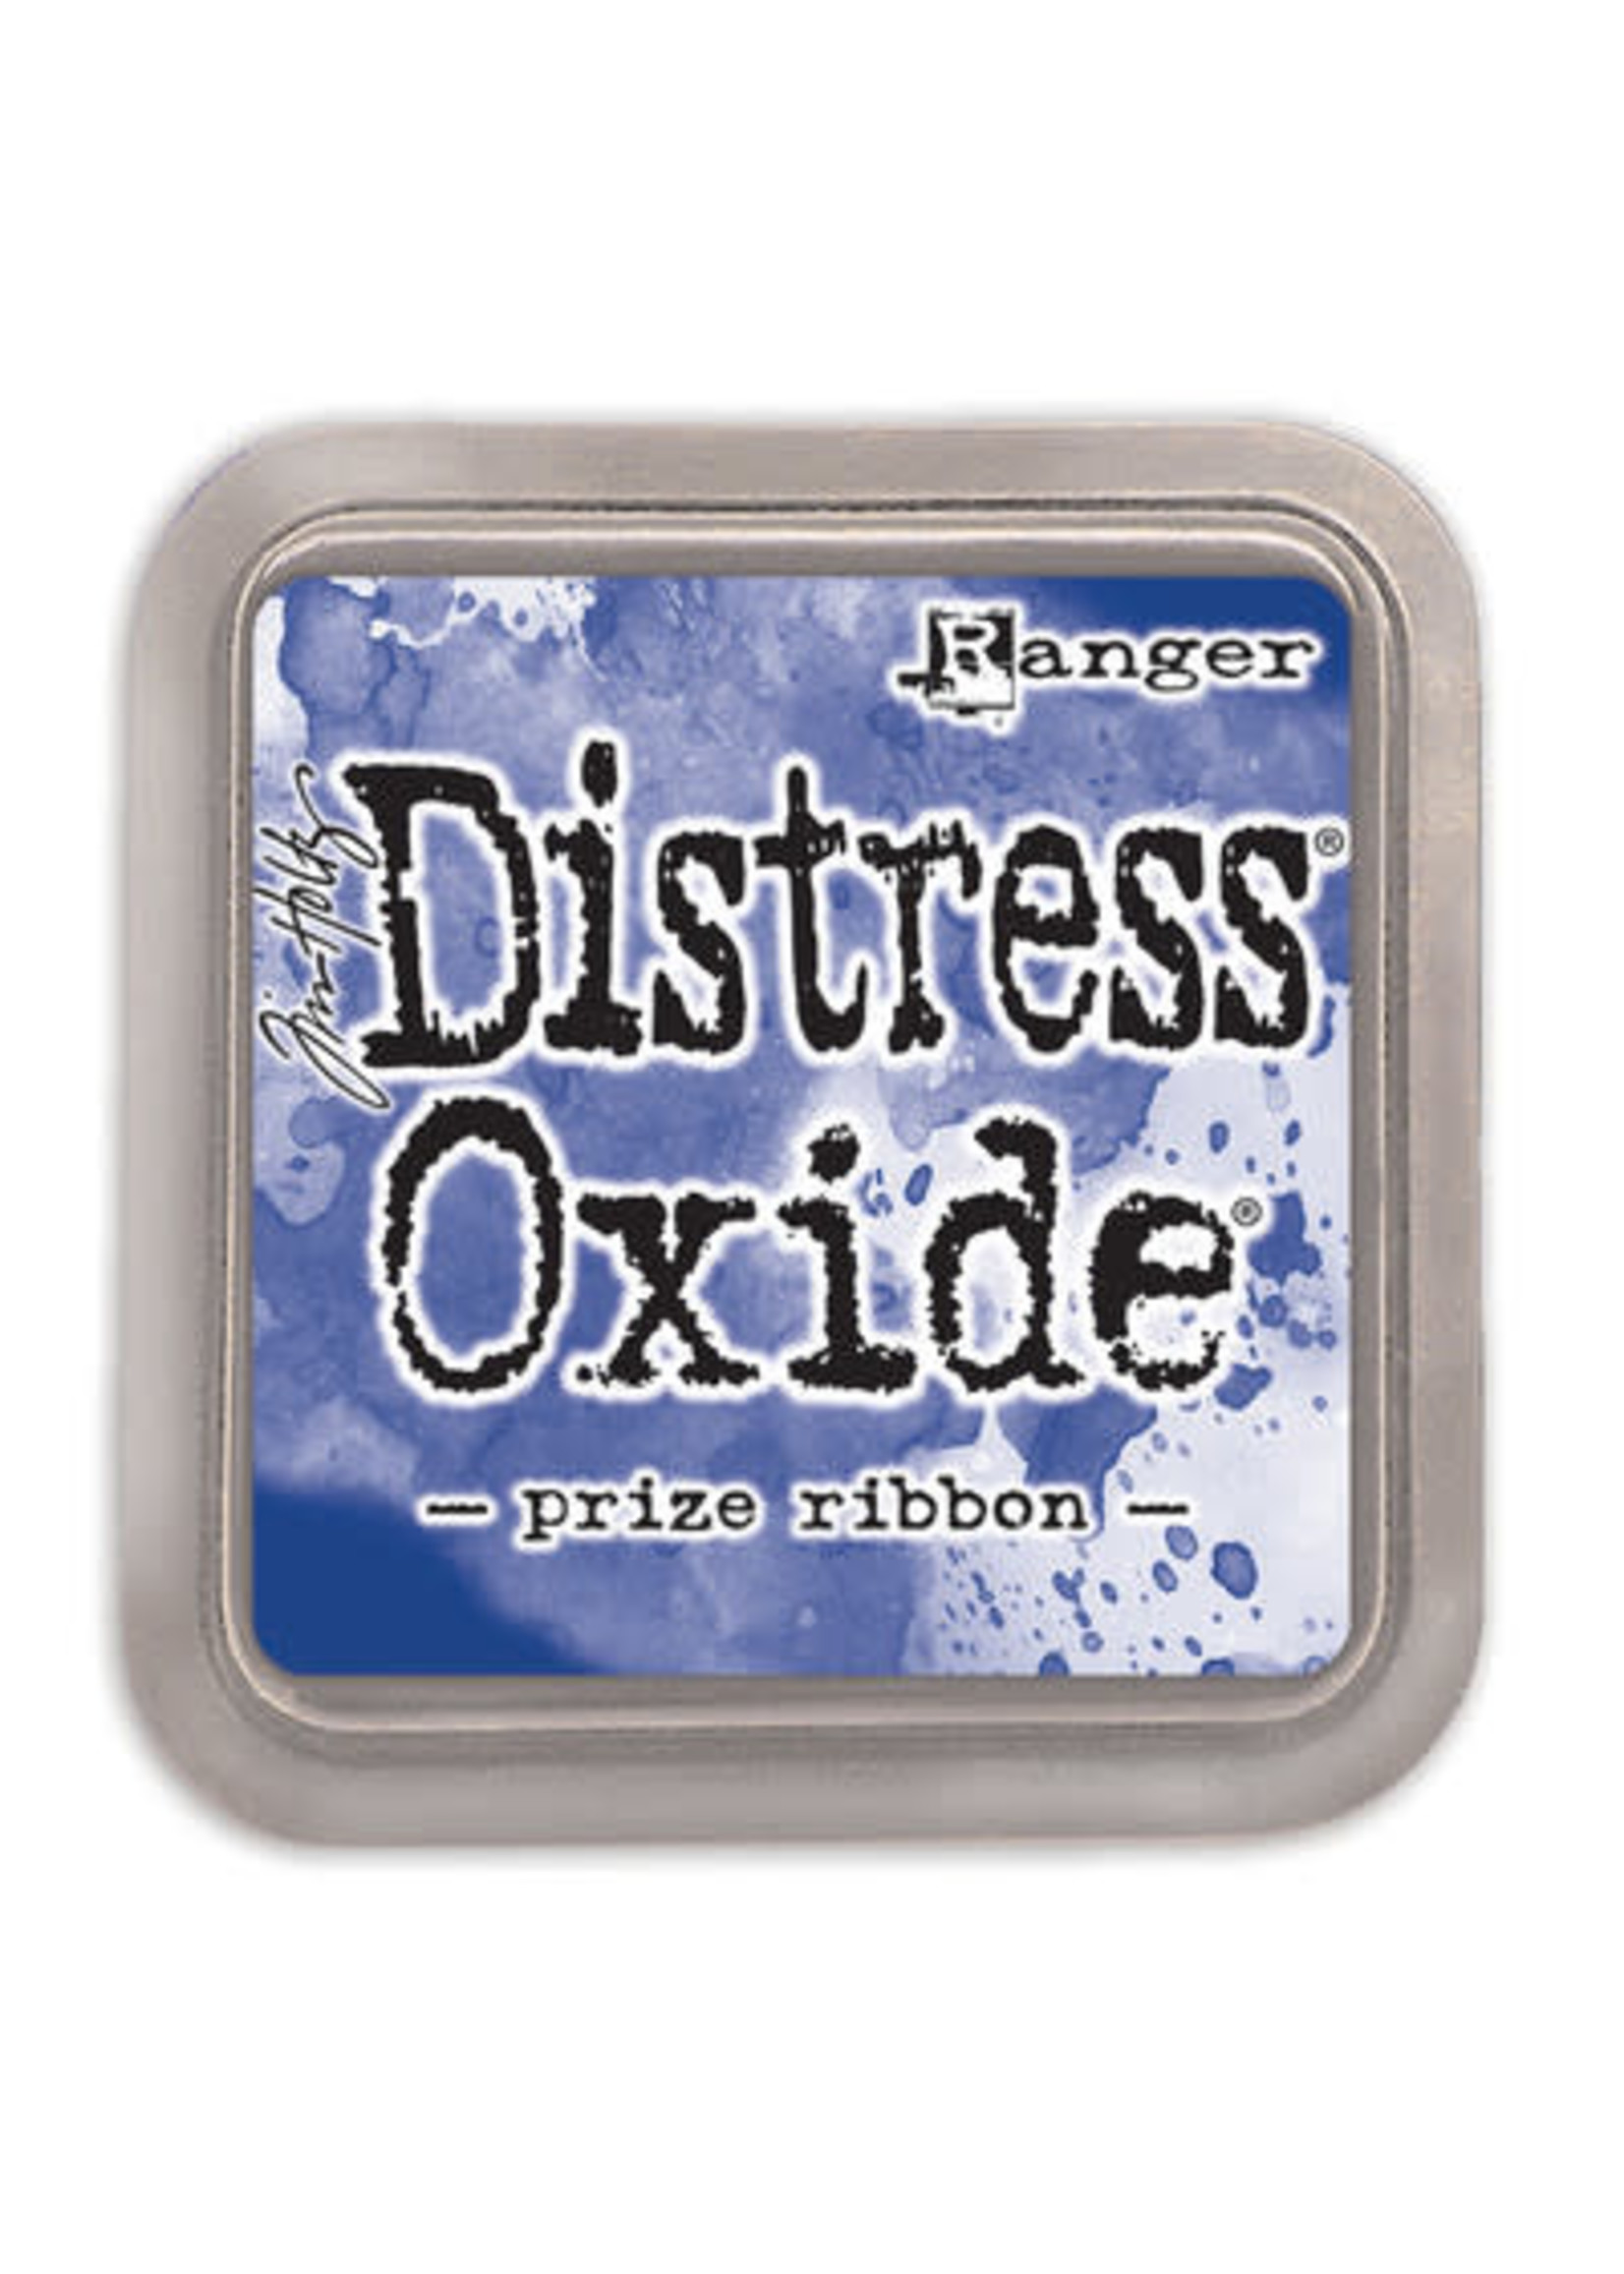 RANGER INDUSTRIES Distress Oxide Ink Pad Prize Ribbon